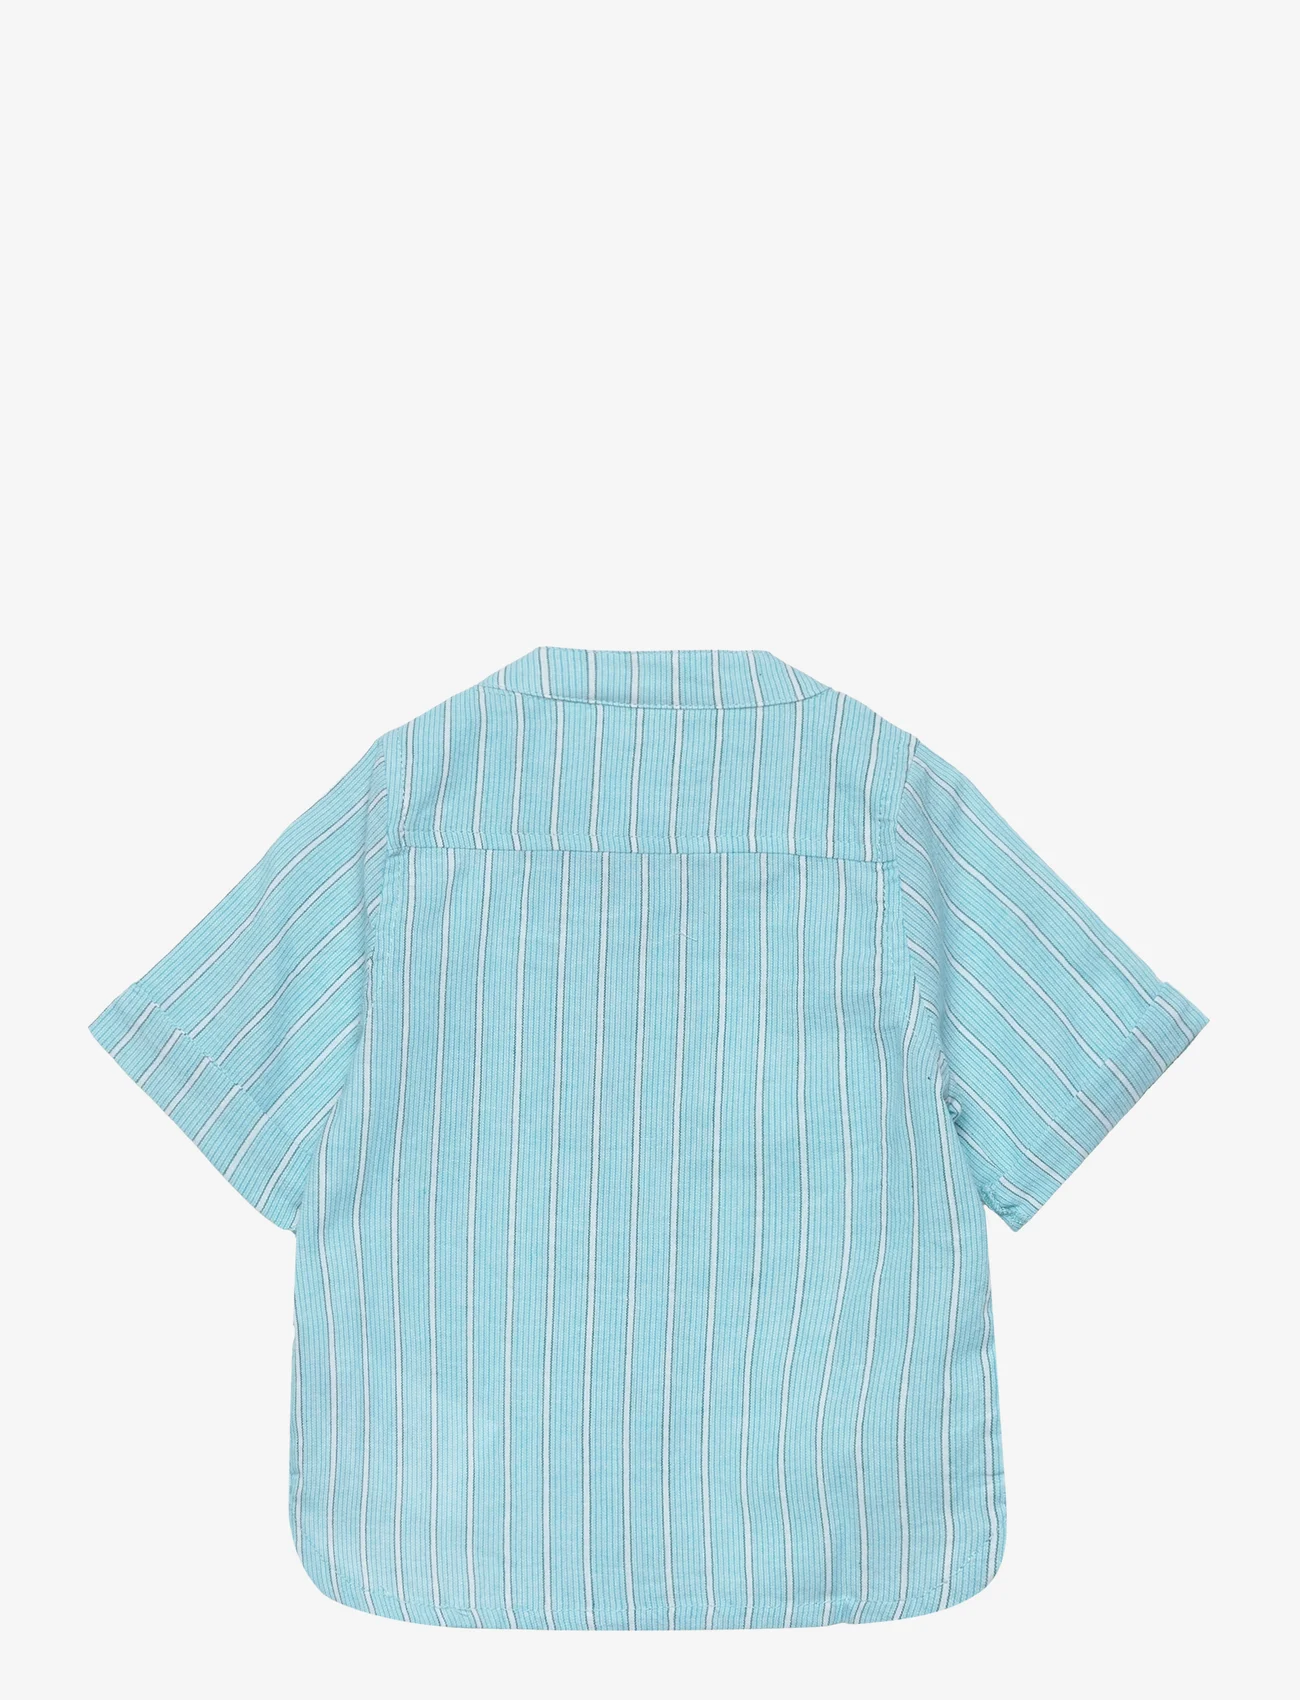 Soft Gallery - SGBEZRAM S_S SHIRT - kortärmade skjortor - sky blue - 1